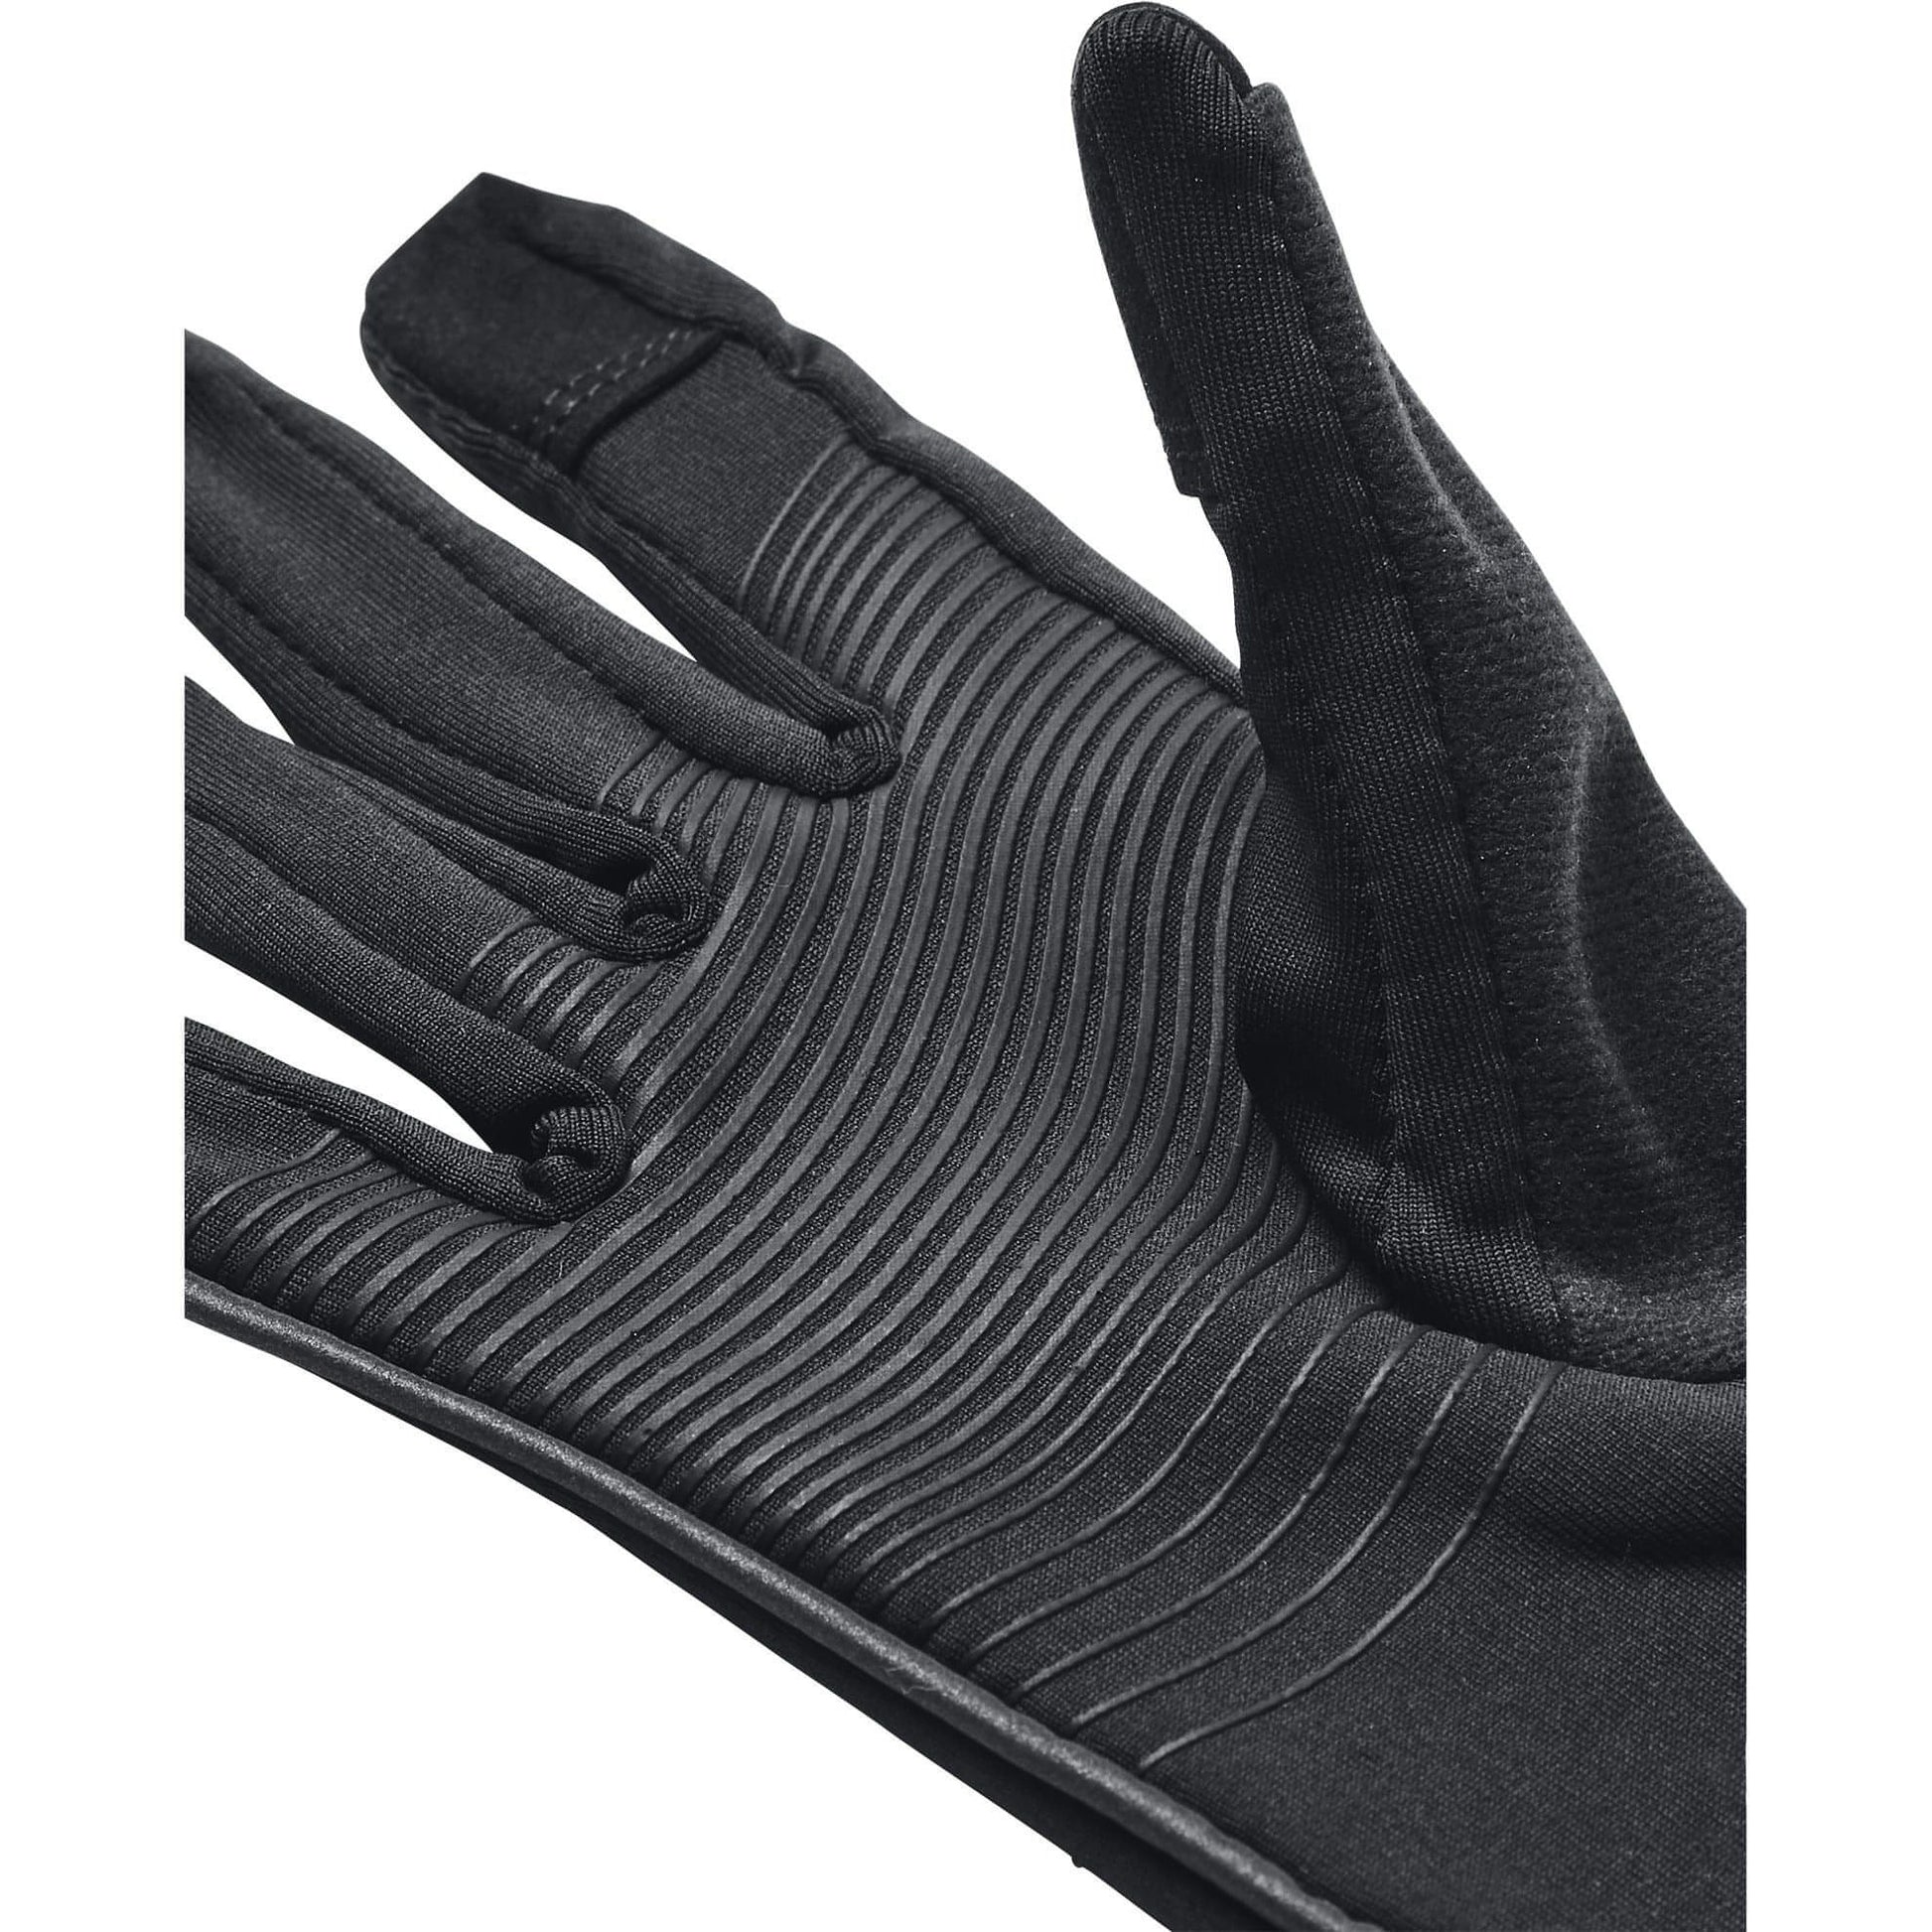 Under Armour Storm Run Liner Gloves Details